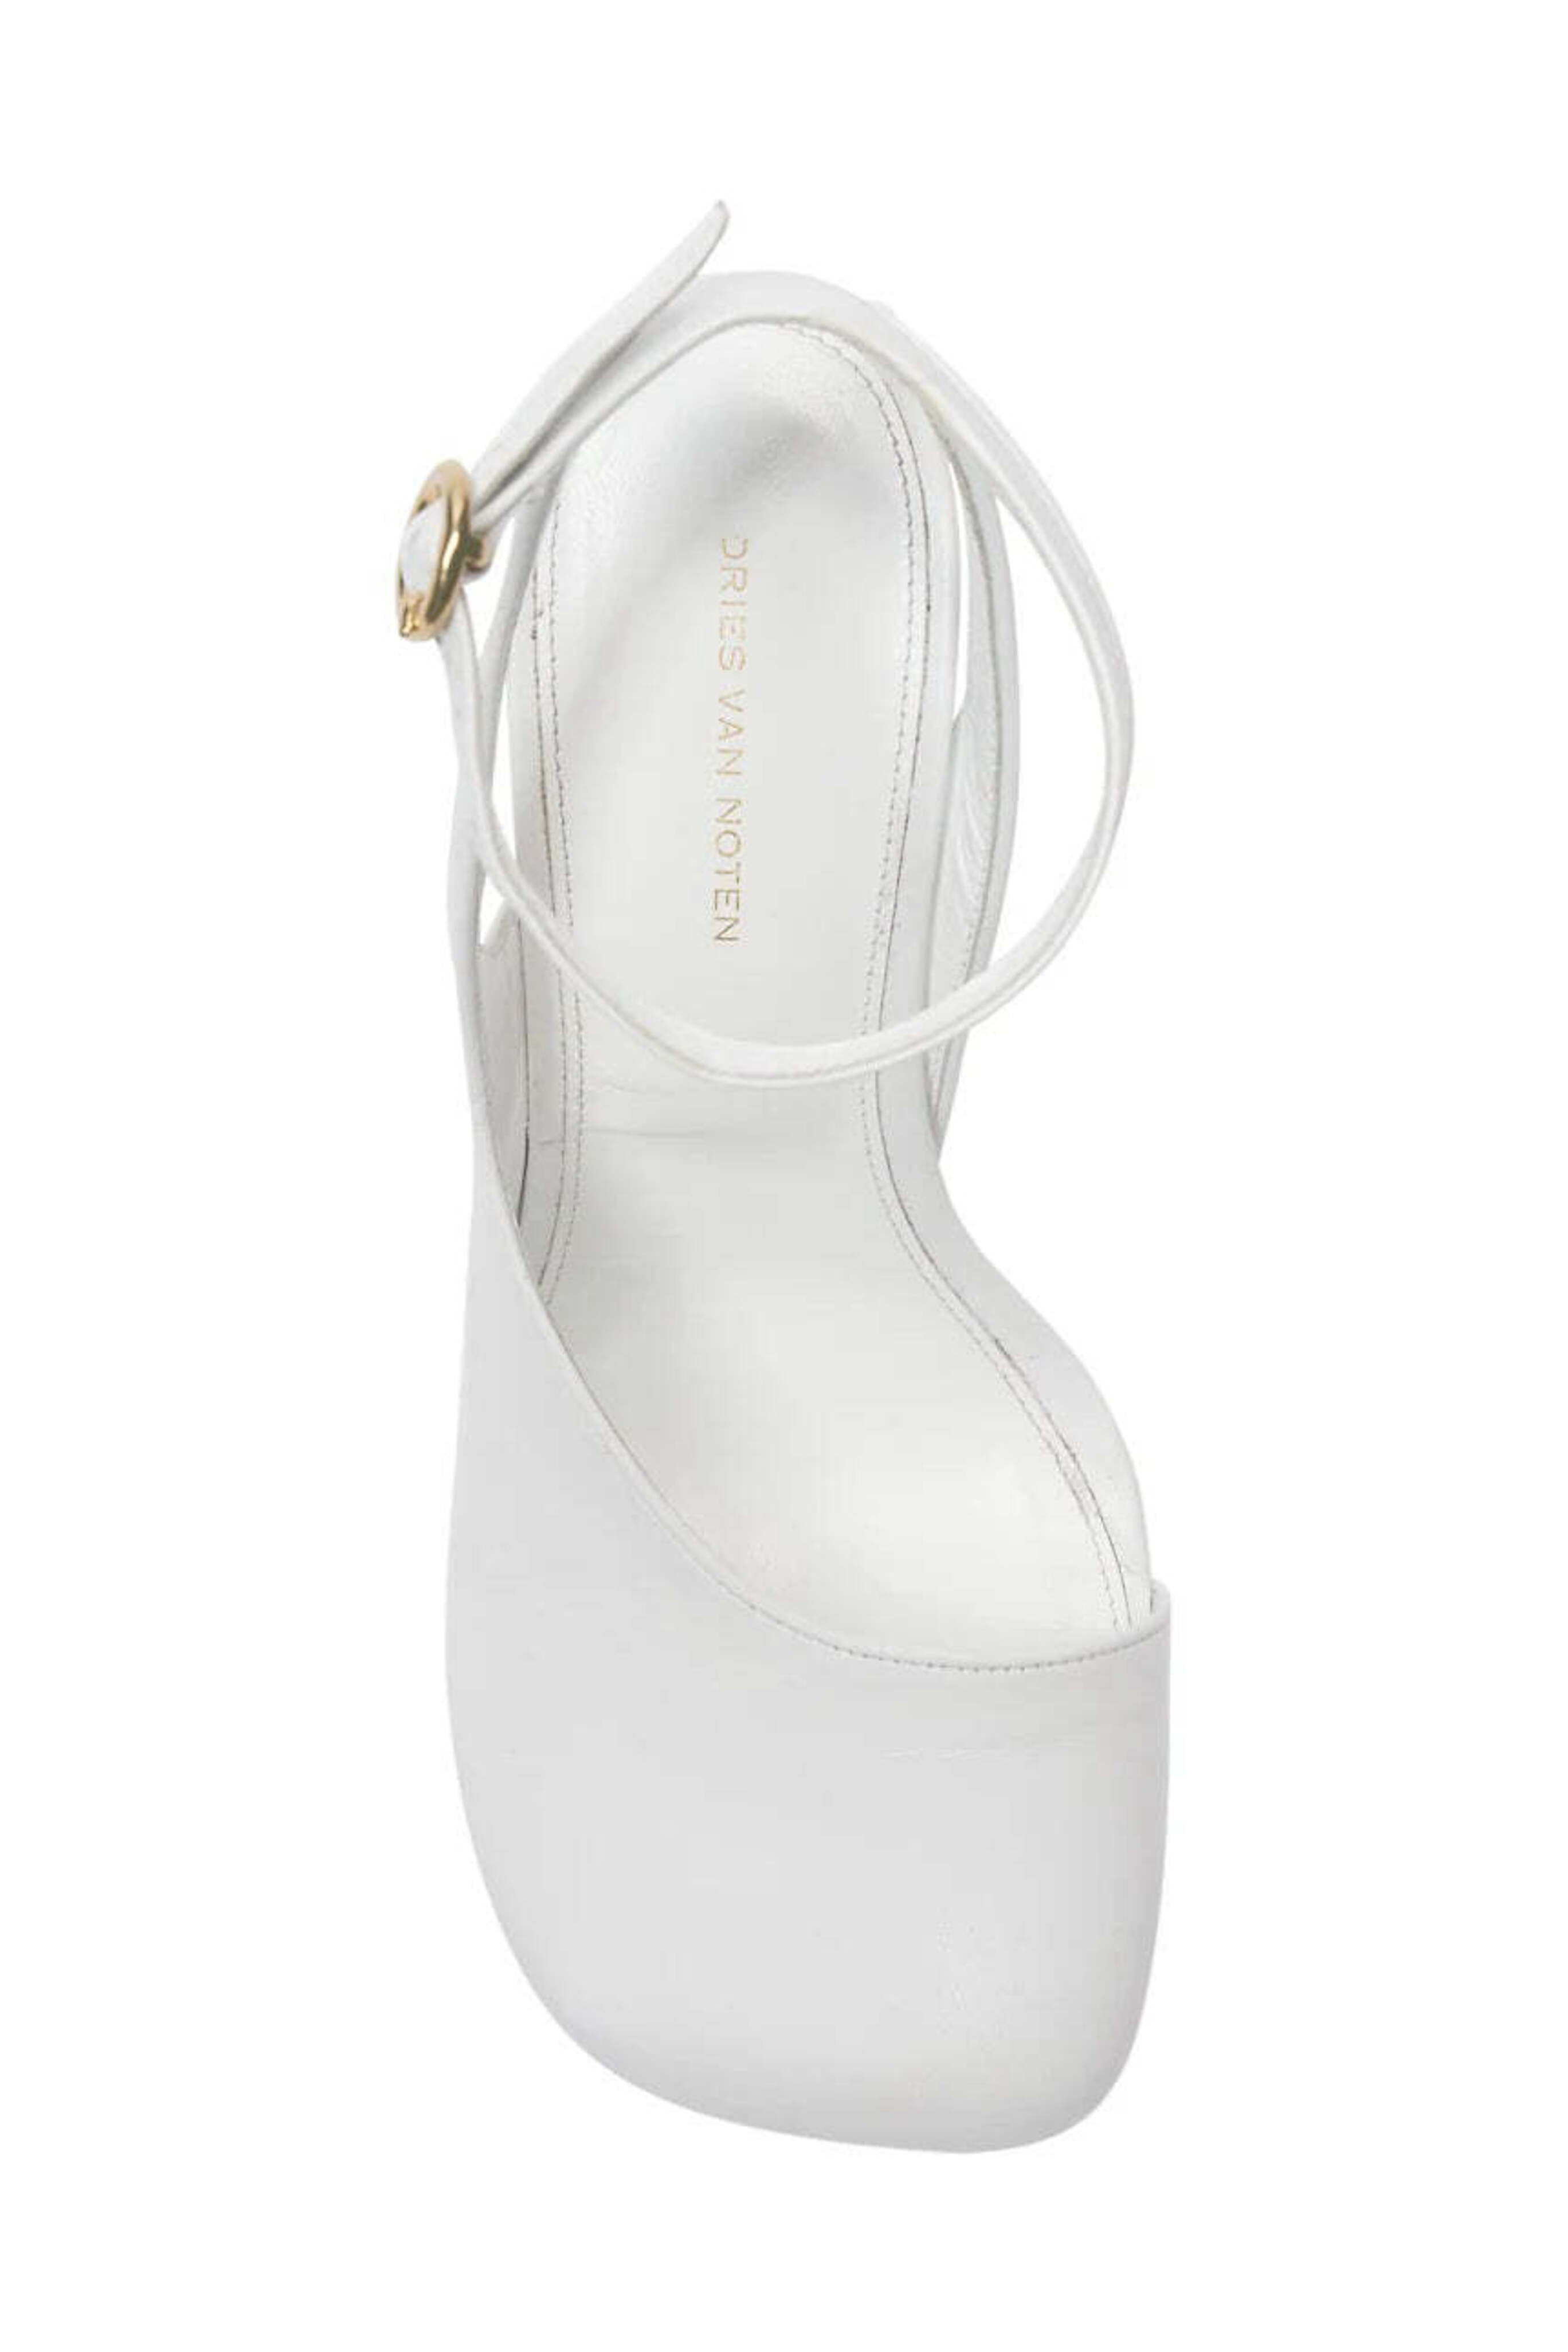 DRIES VAN NOTEN Asymmetric Virgo White Leather Sandals